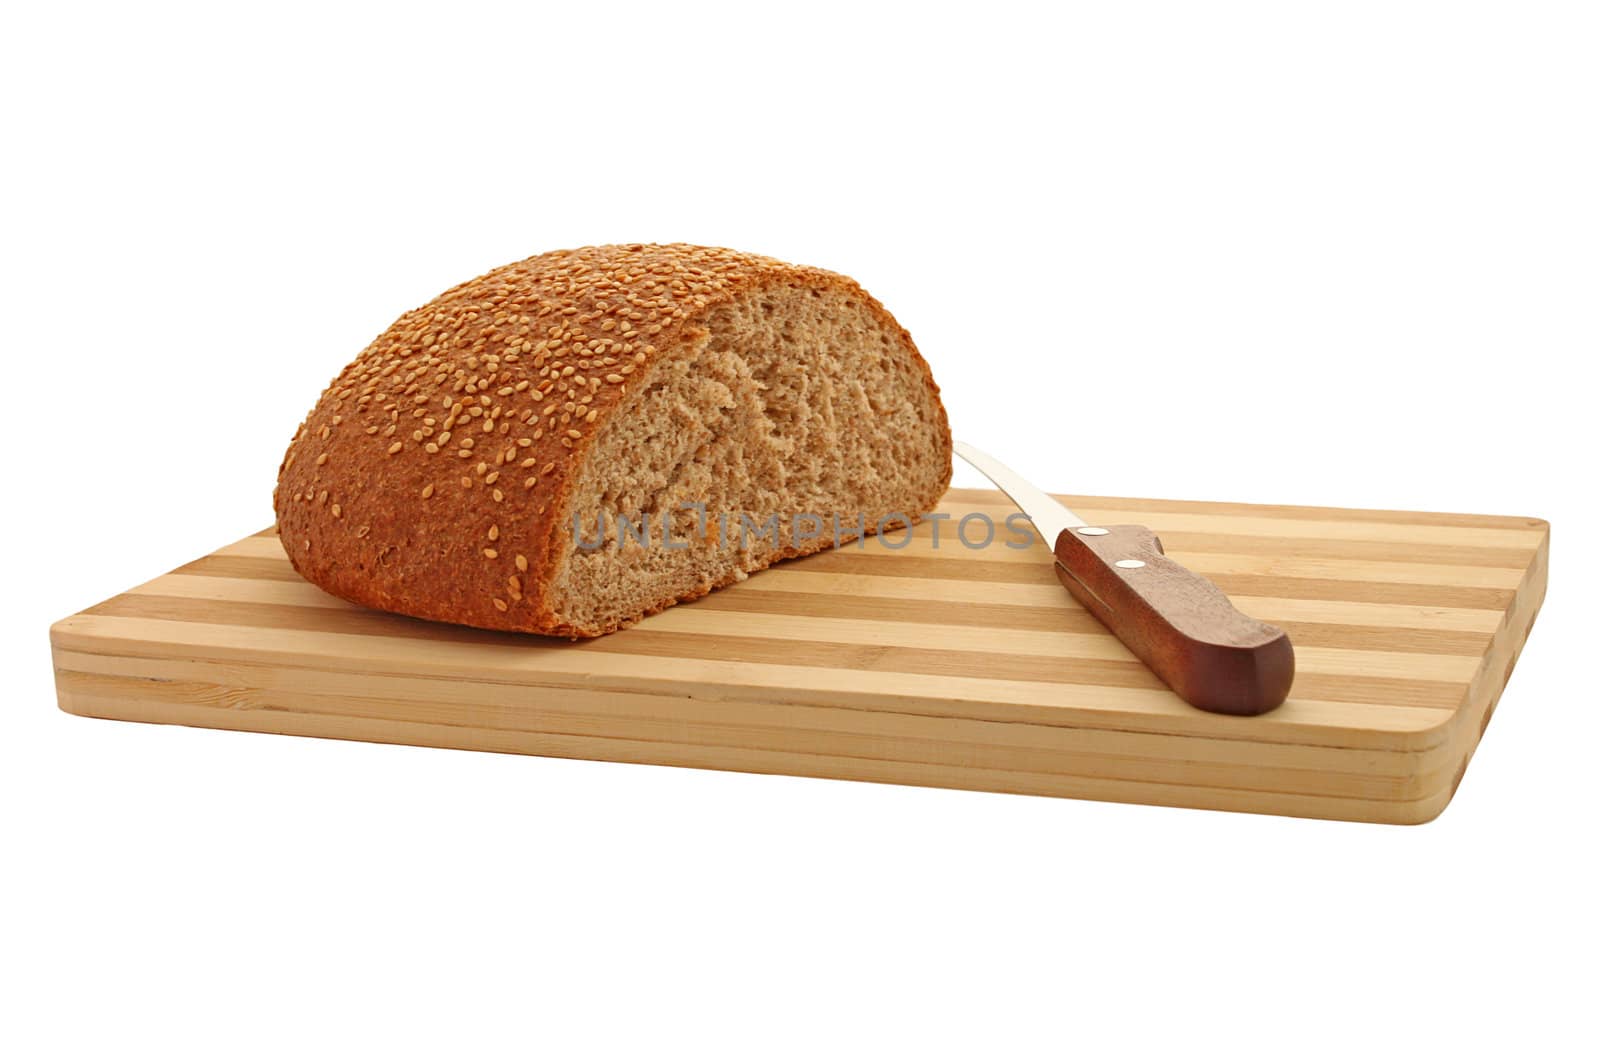 bran bread with knife on cutting board